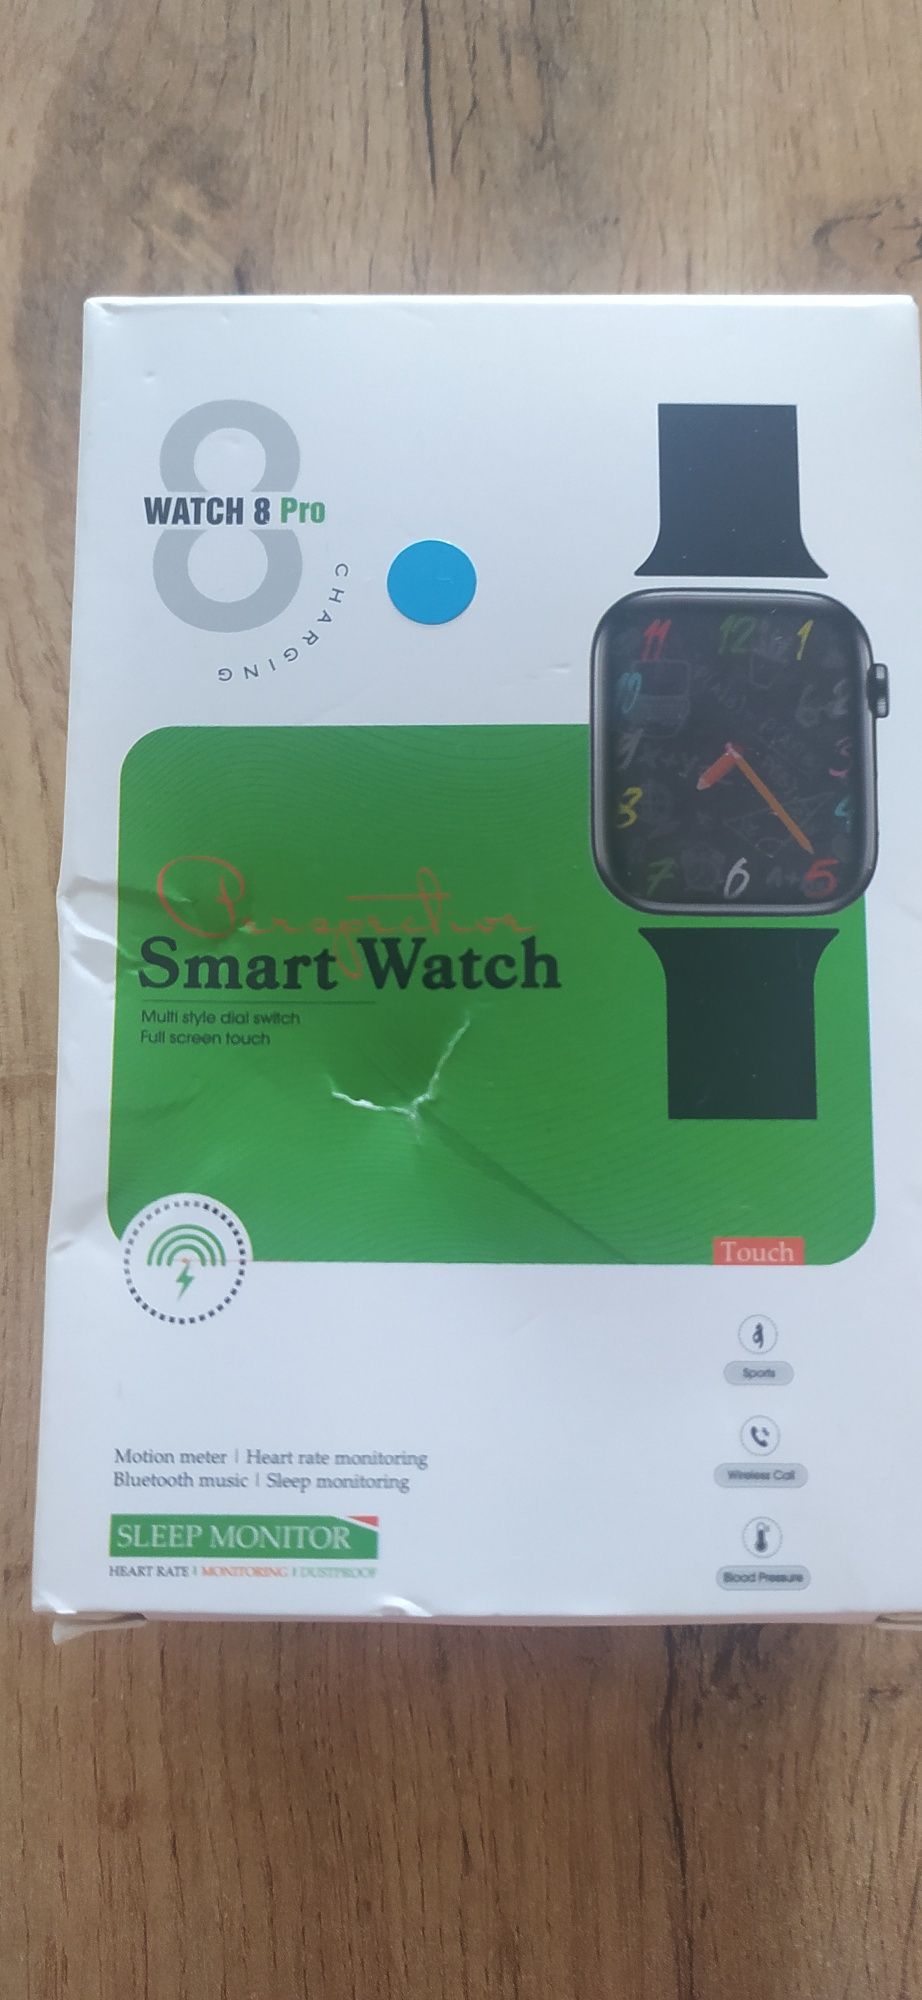 Smartwatch watch 8 pro